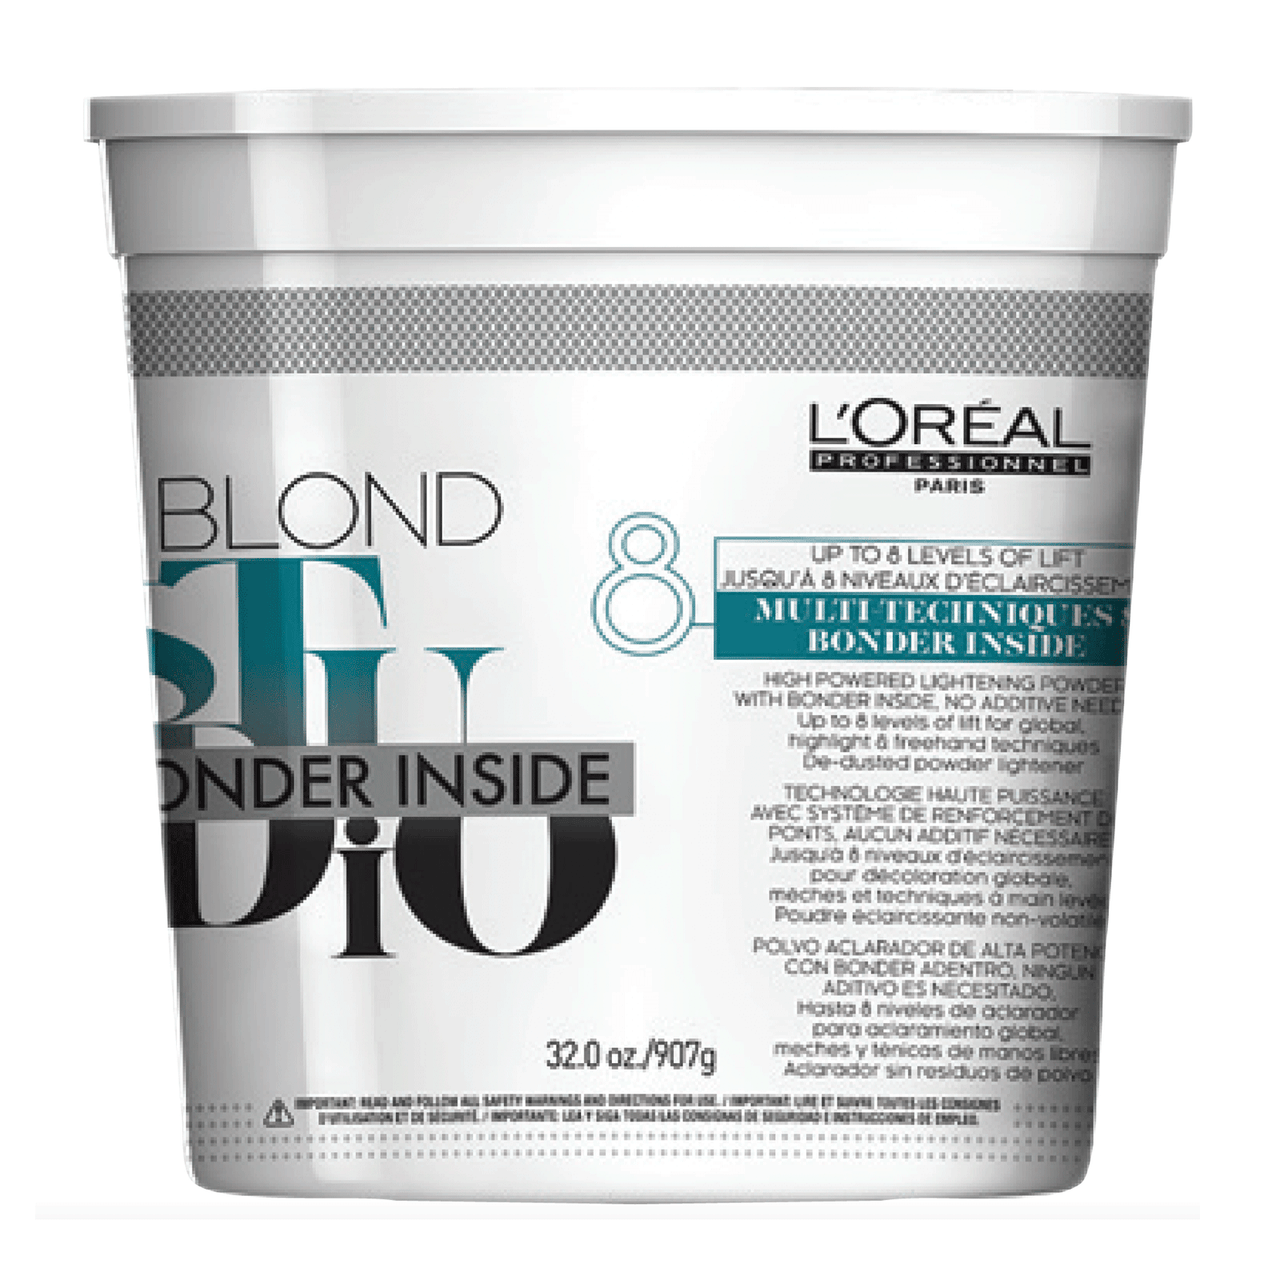 L'Oreal Professionnel Blond Studio 8-Bonder Inside 17.6 oz.